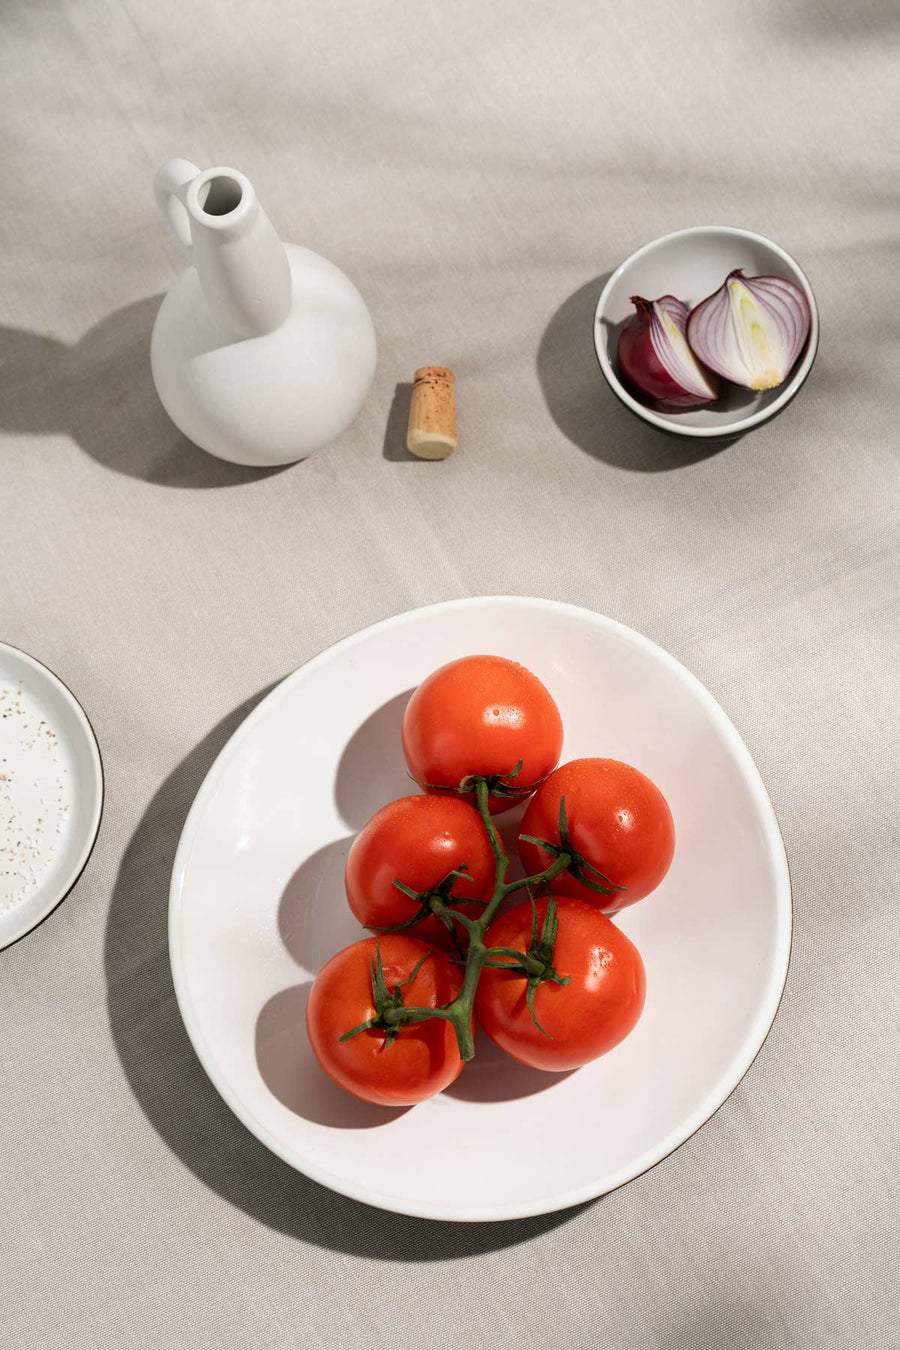 gharyan dadasi stoneware dinner plate with tomatoes